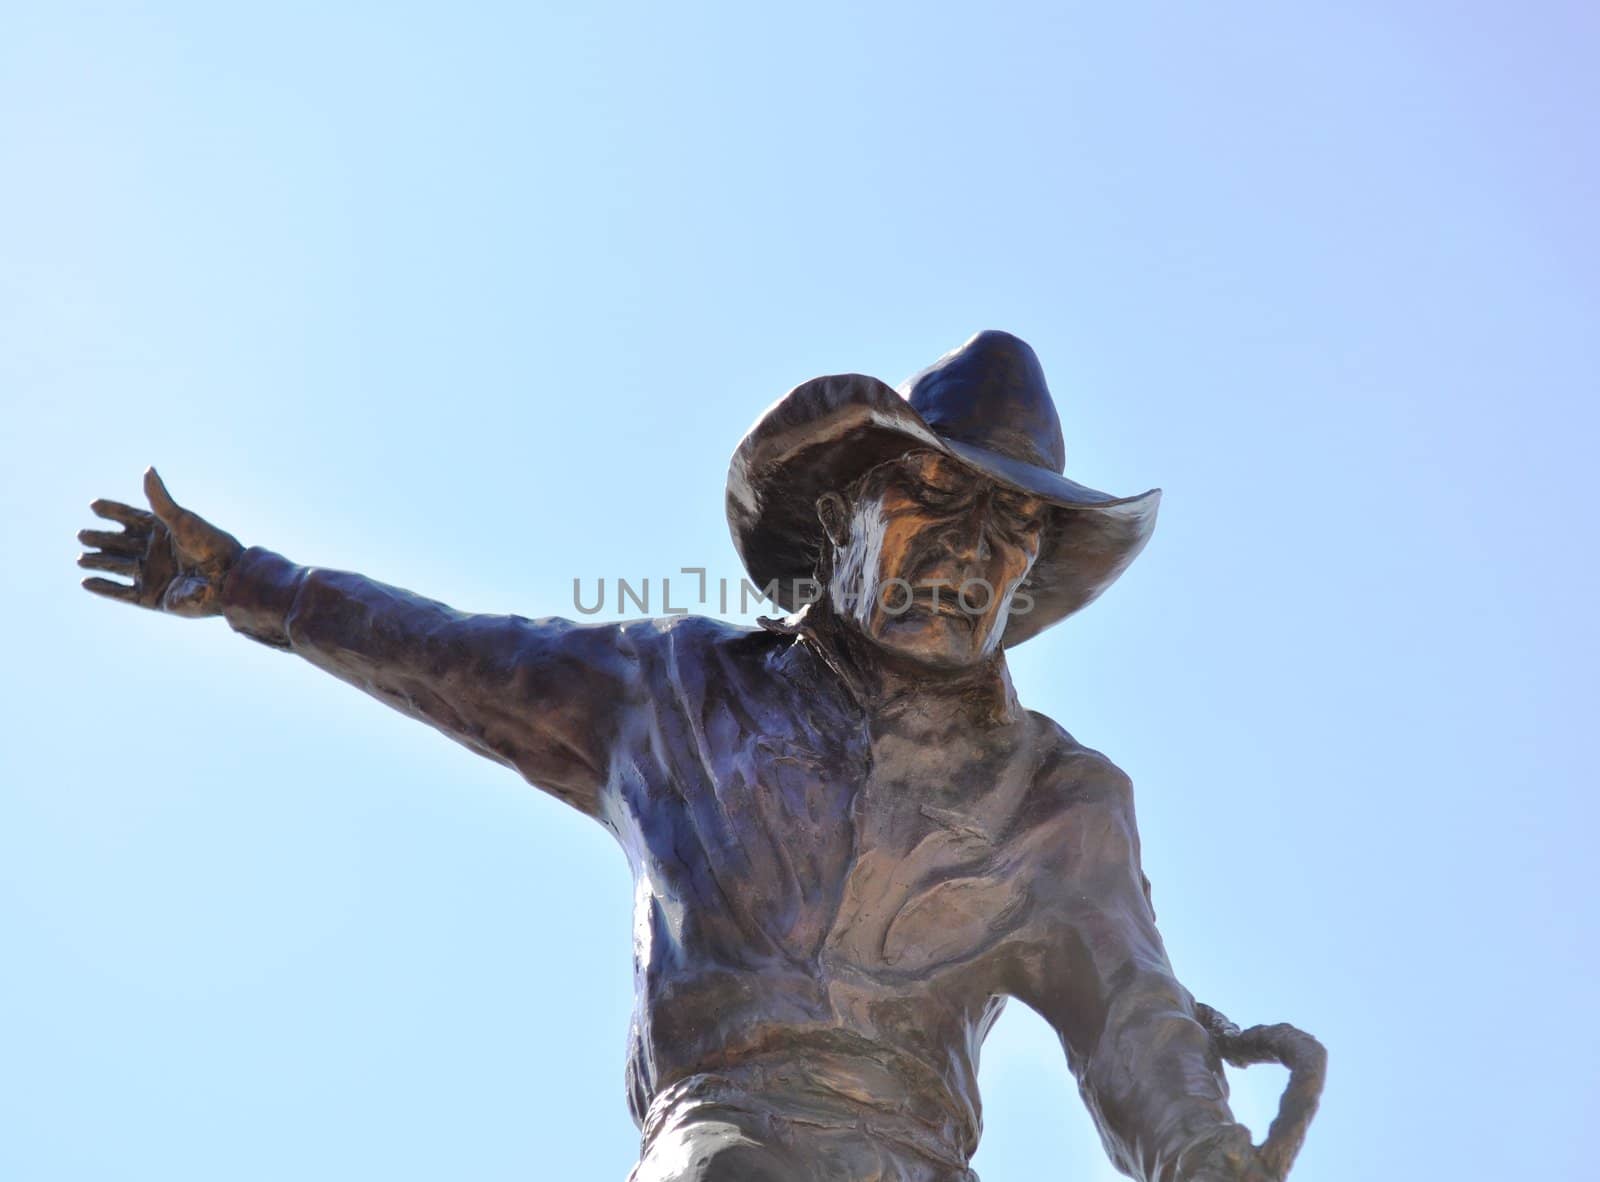 Deadwood rodeo rider statue